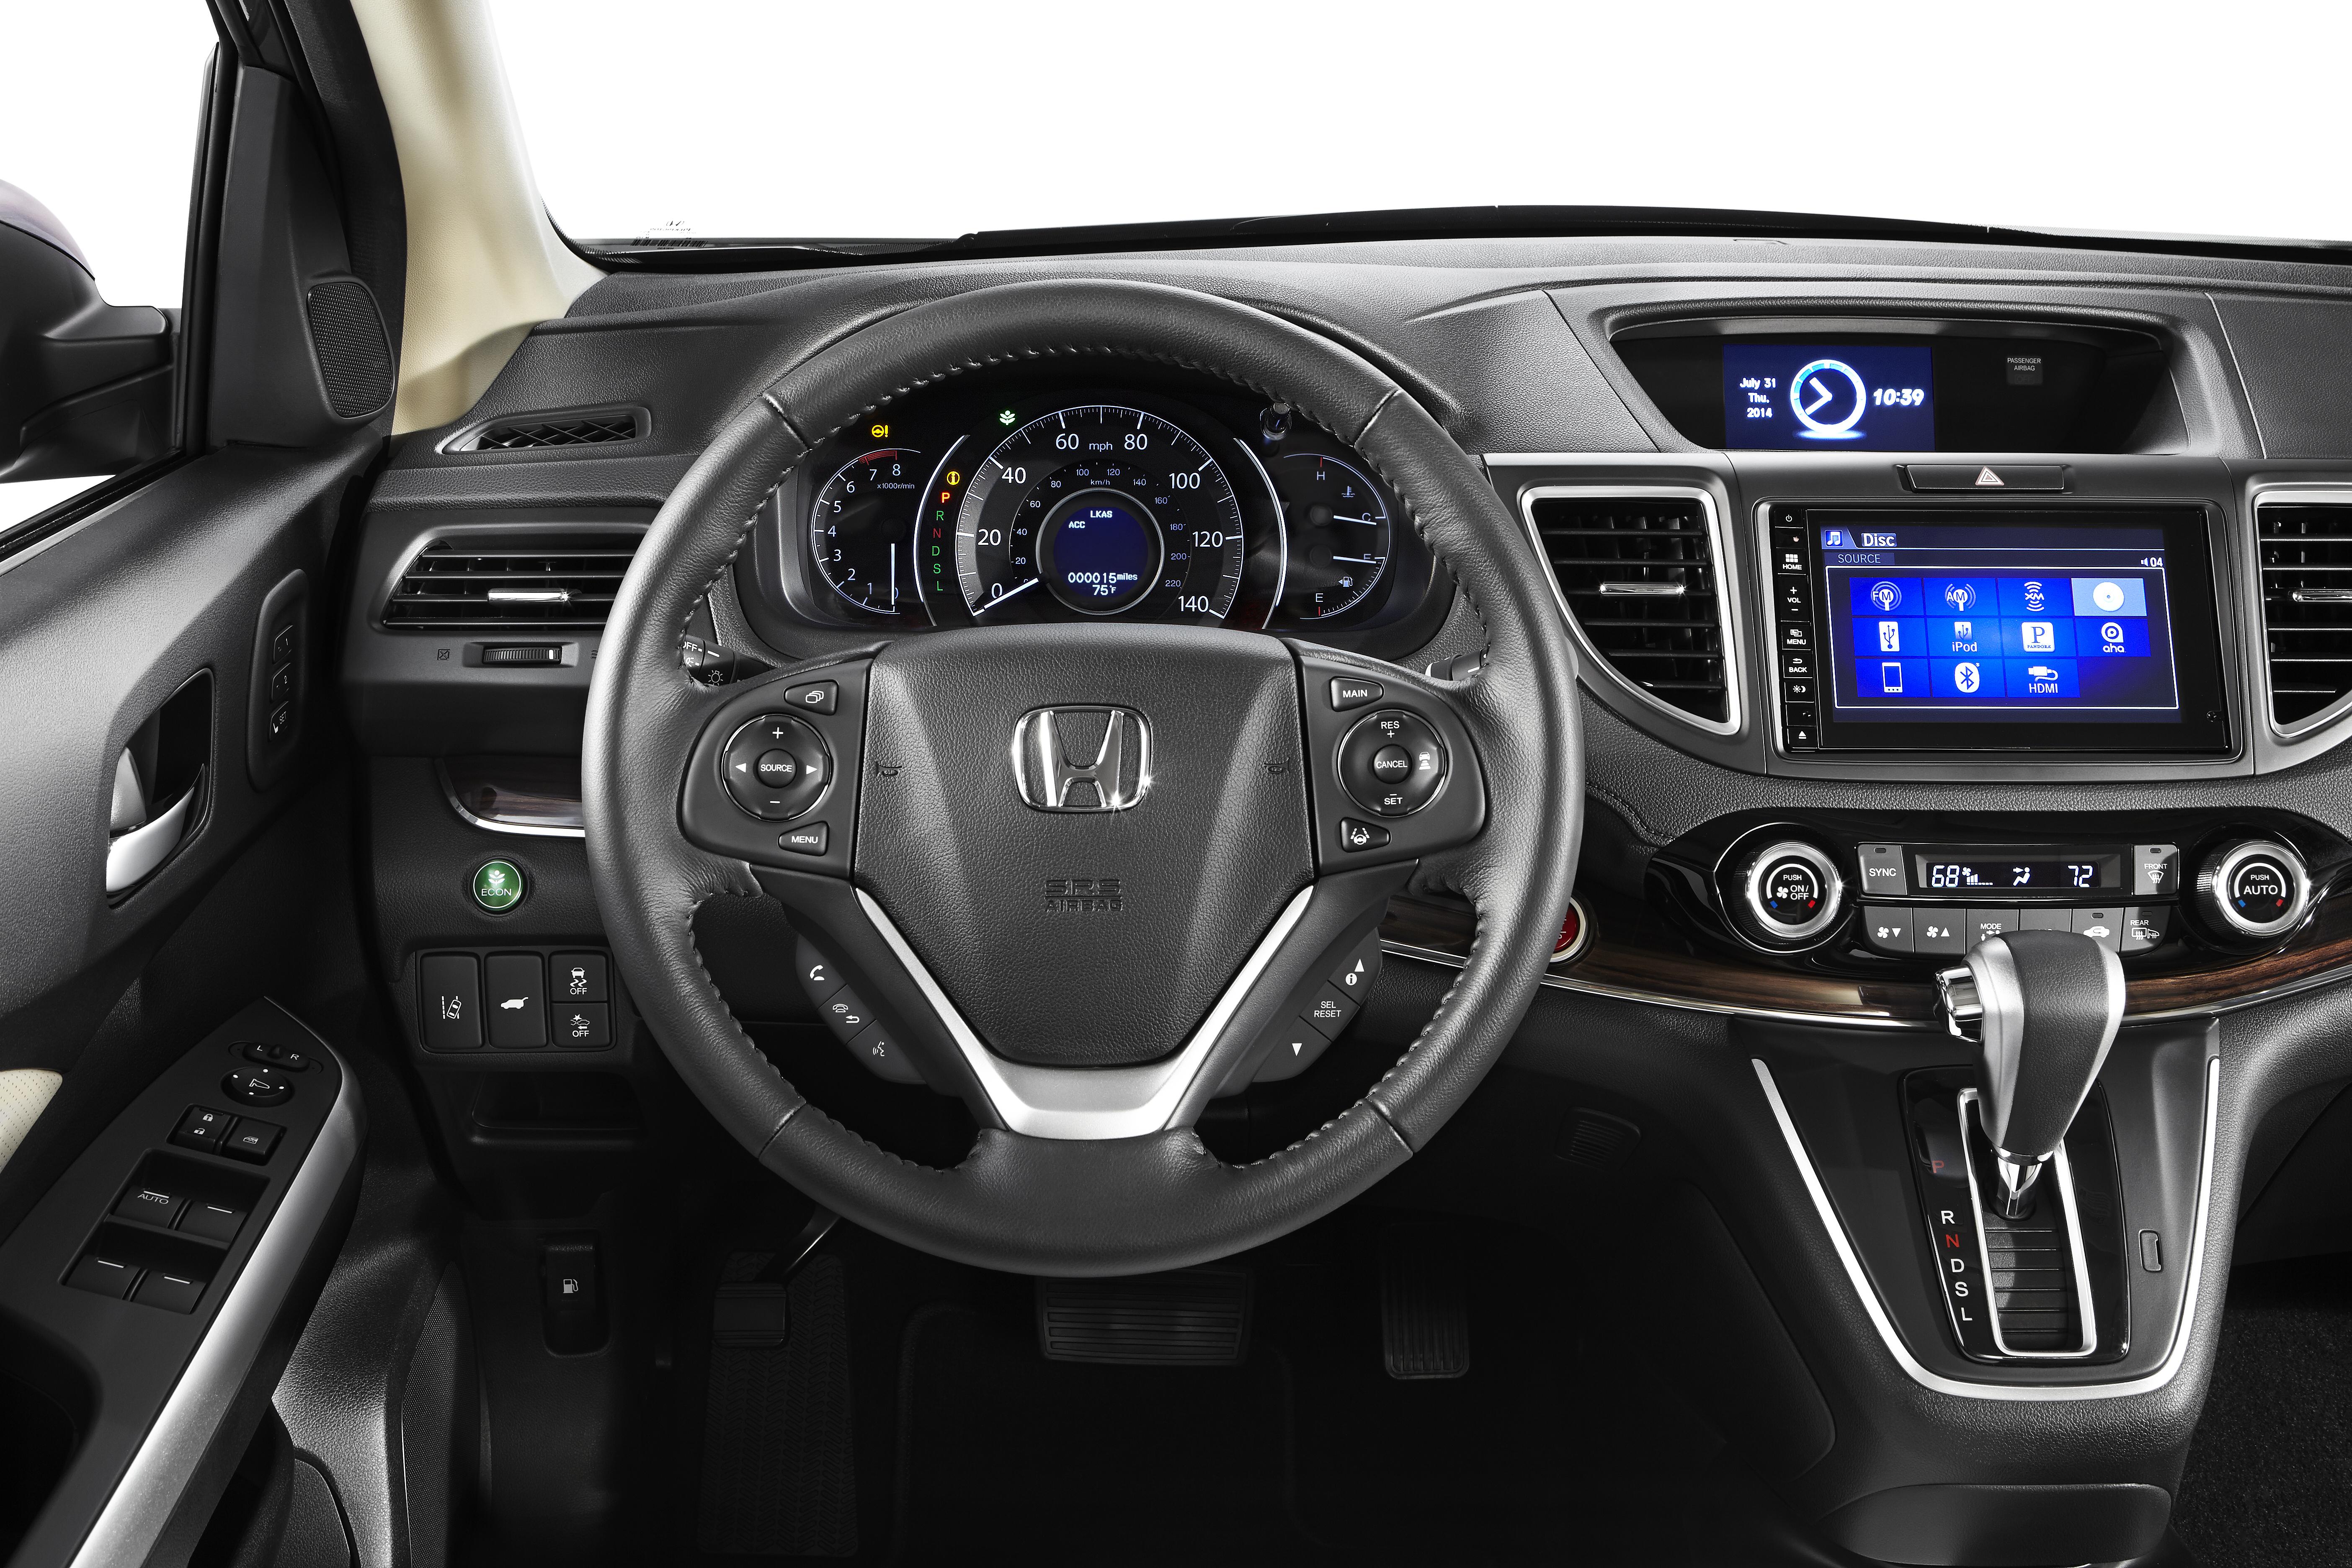 Honda v панель. Honda CRV 2016 салон. Honda CRV 2015 салон. Хонда СРВ 4 поколения 2.4. Honda CR-V 2017 салон.